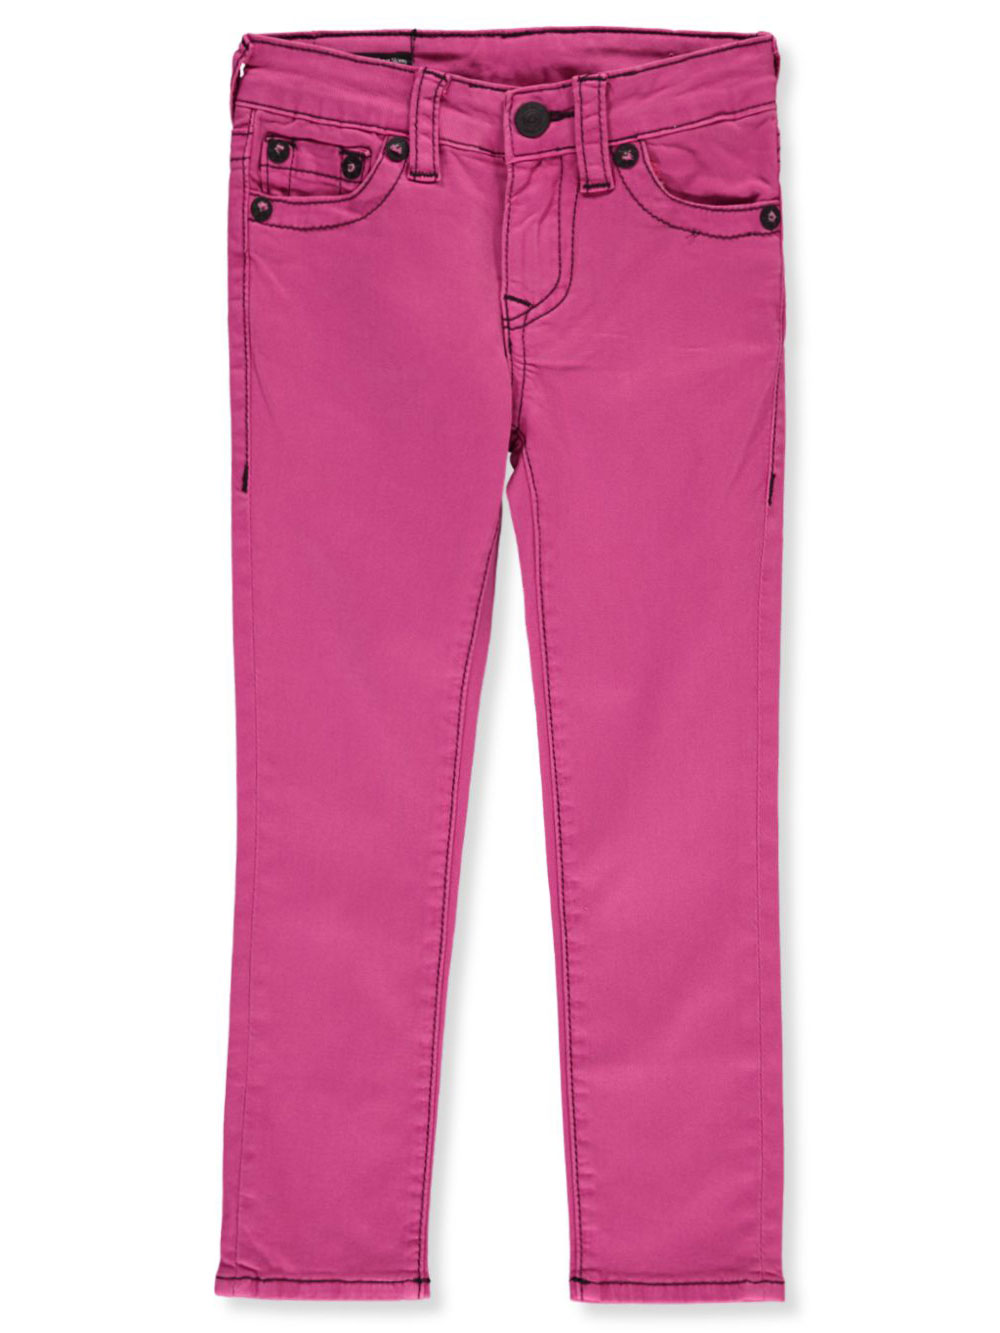 pink true religion jeans